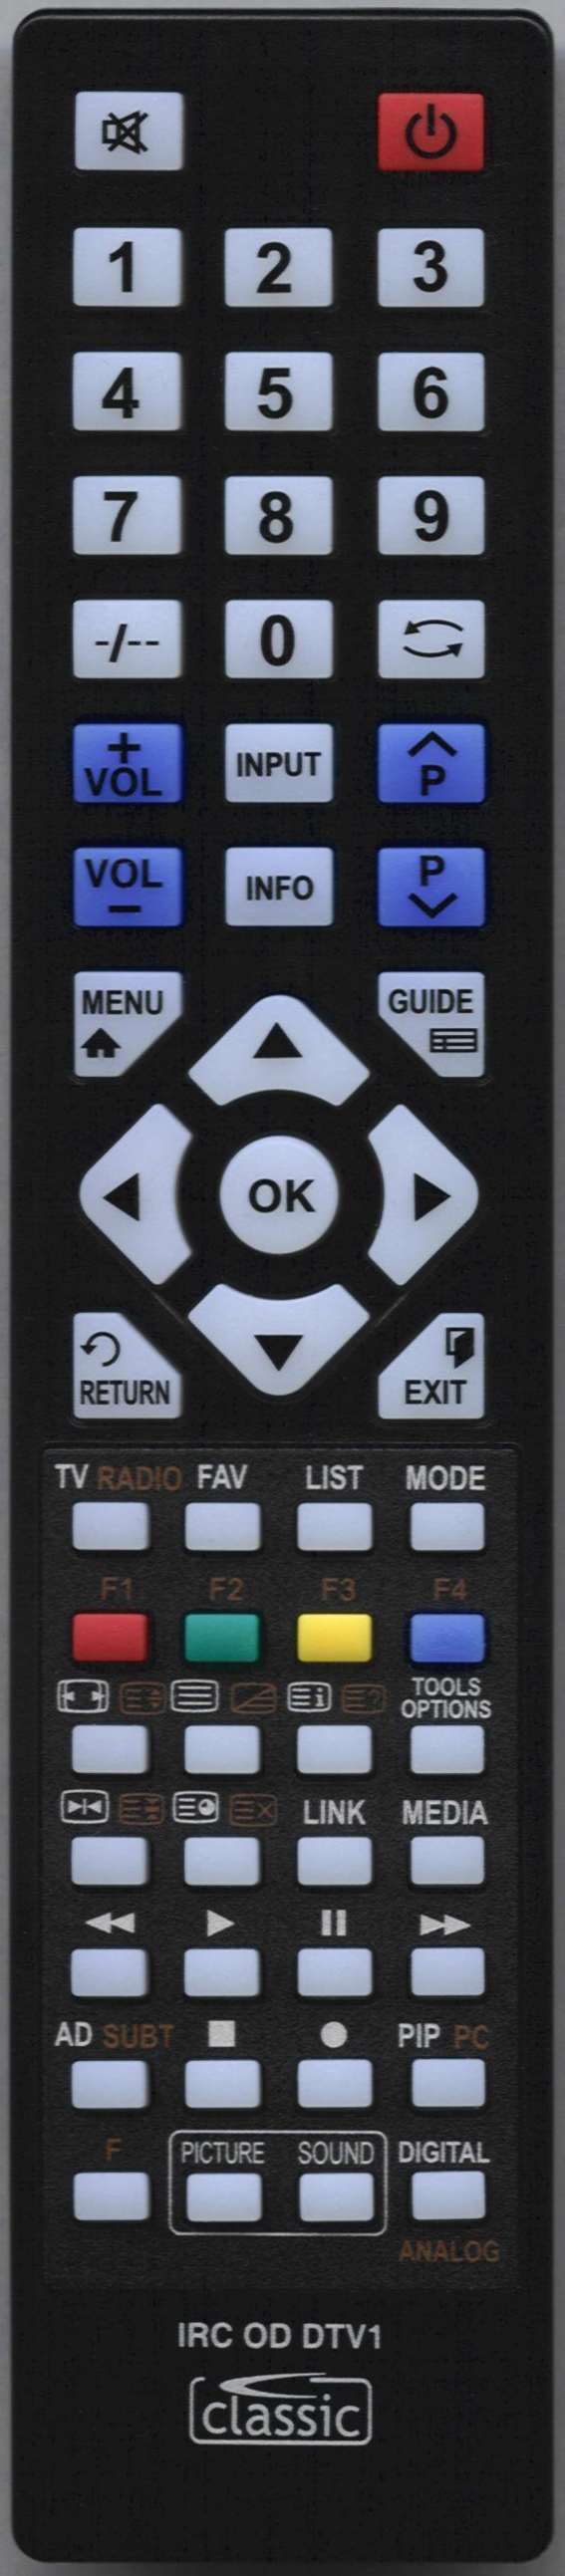 JVC RM-C2501 Remote Control